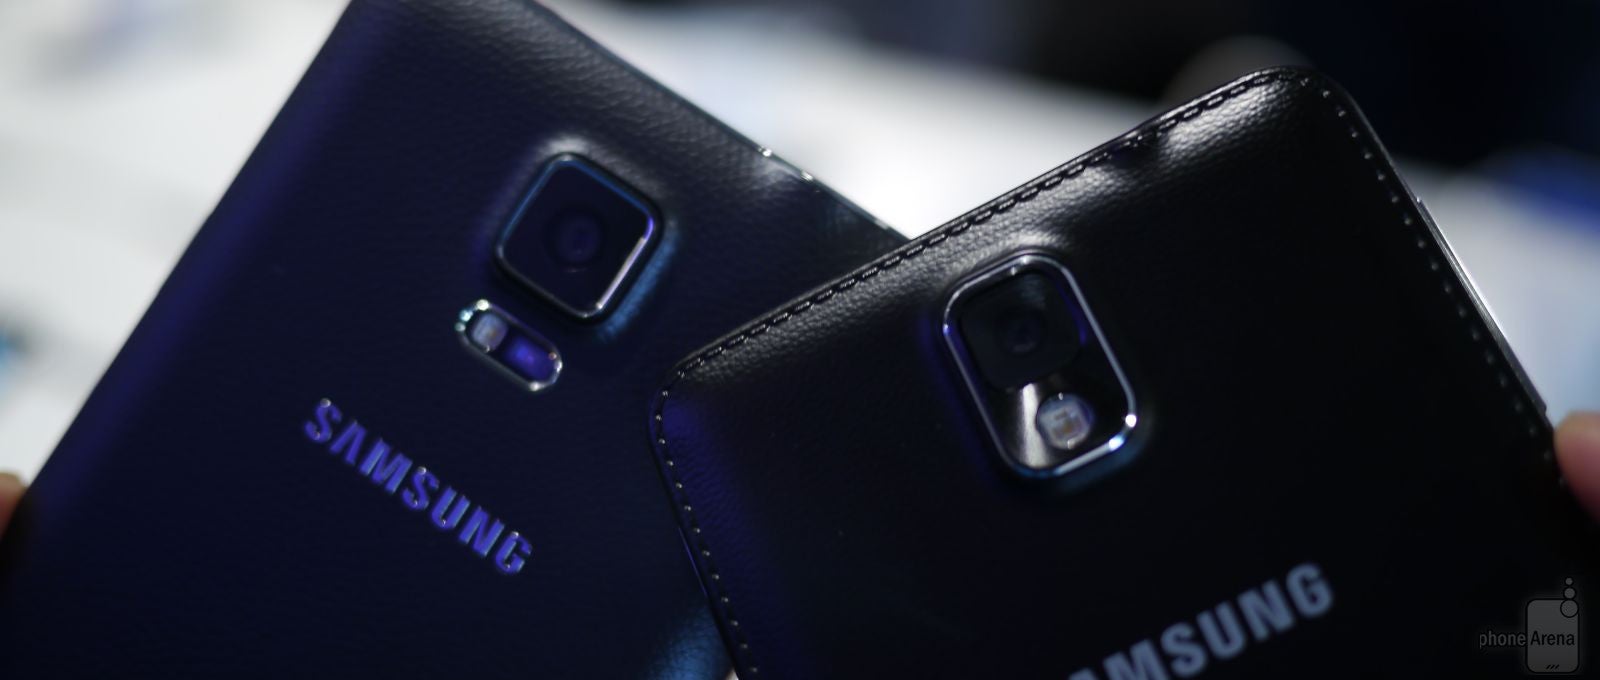 Samsung Galaxy Note 4 vs Samsung Galaxy Note 3: first look